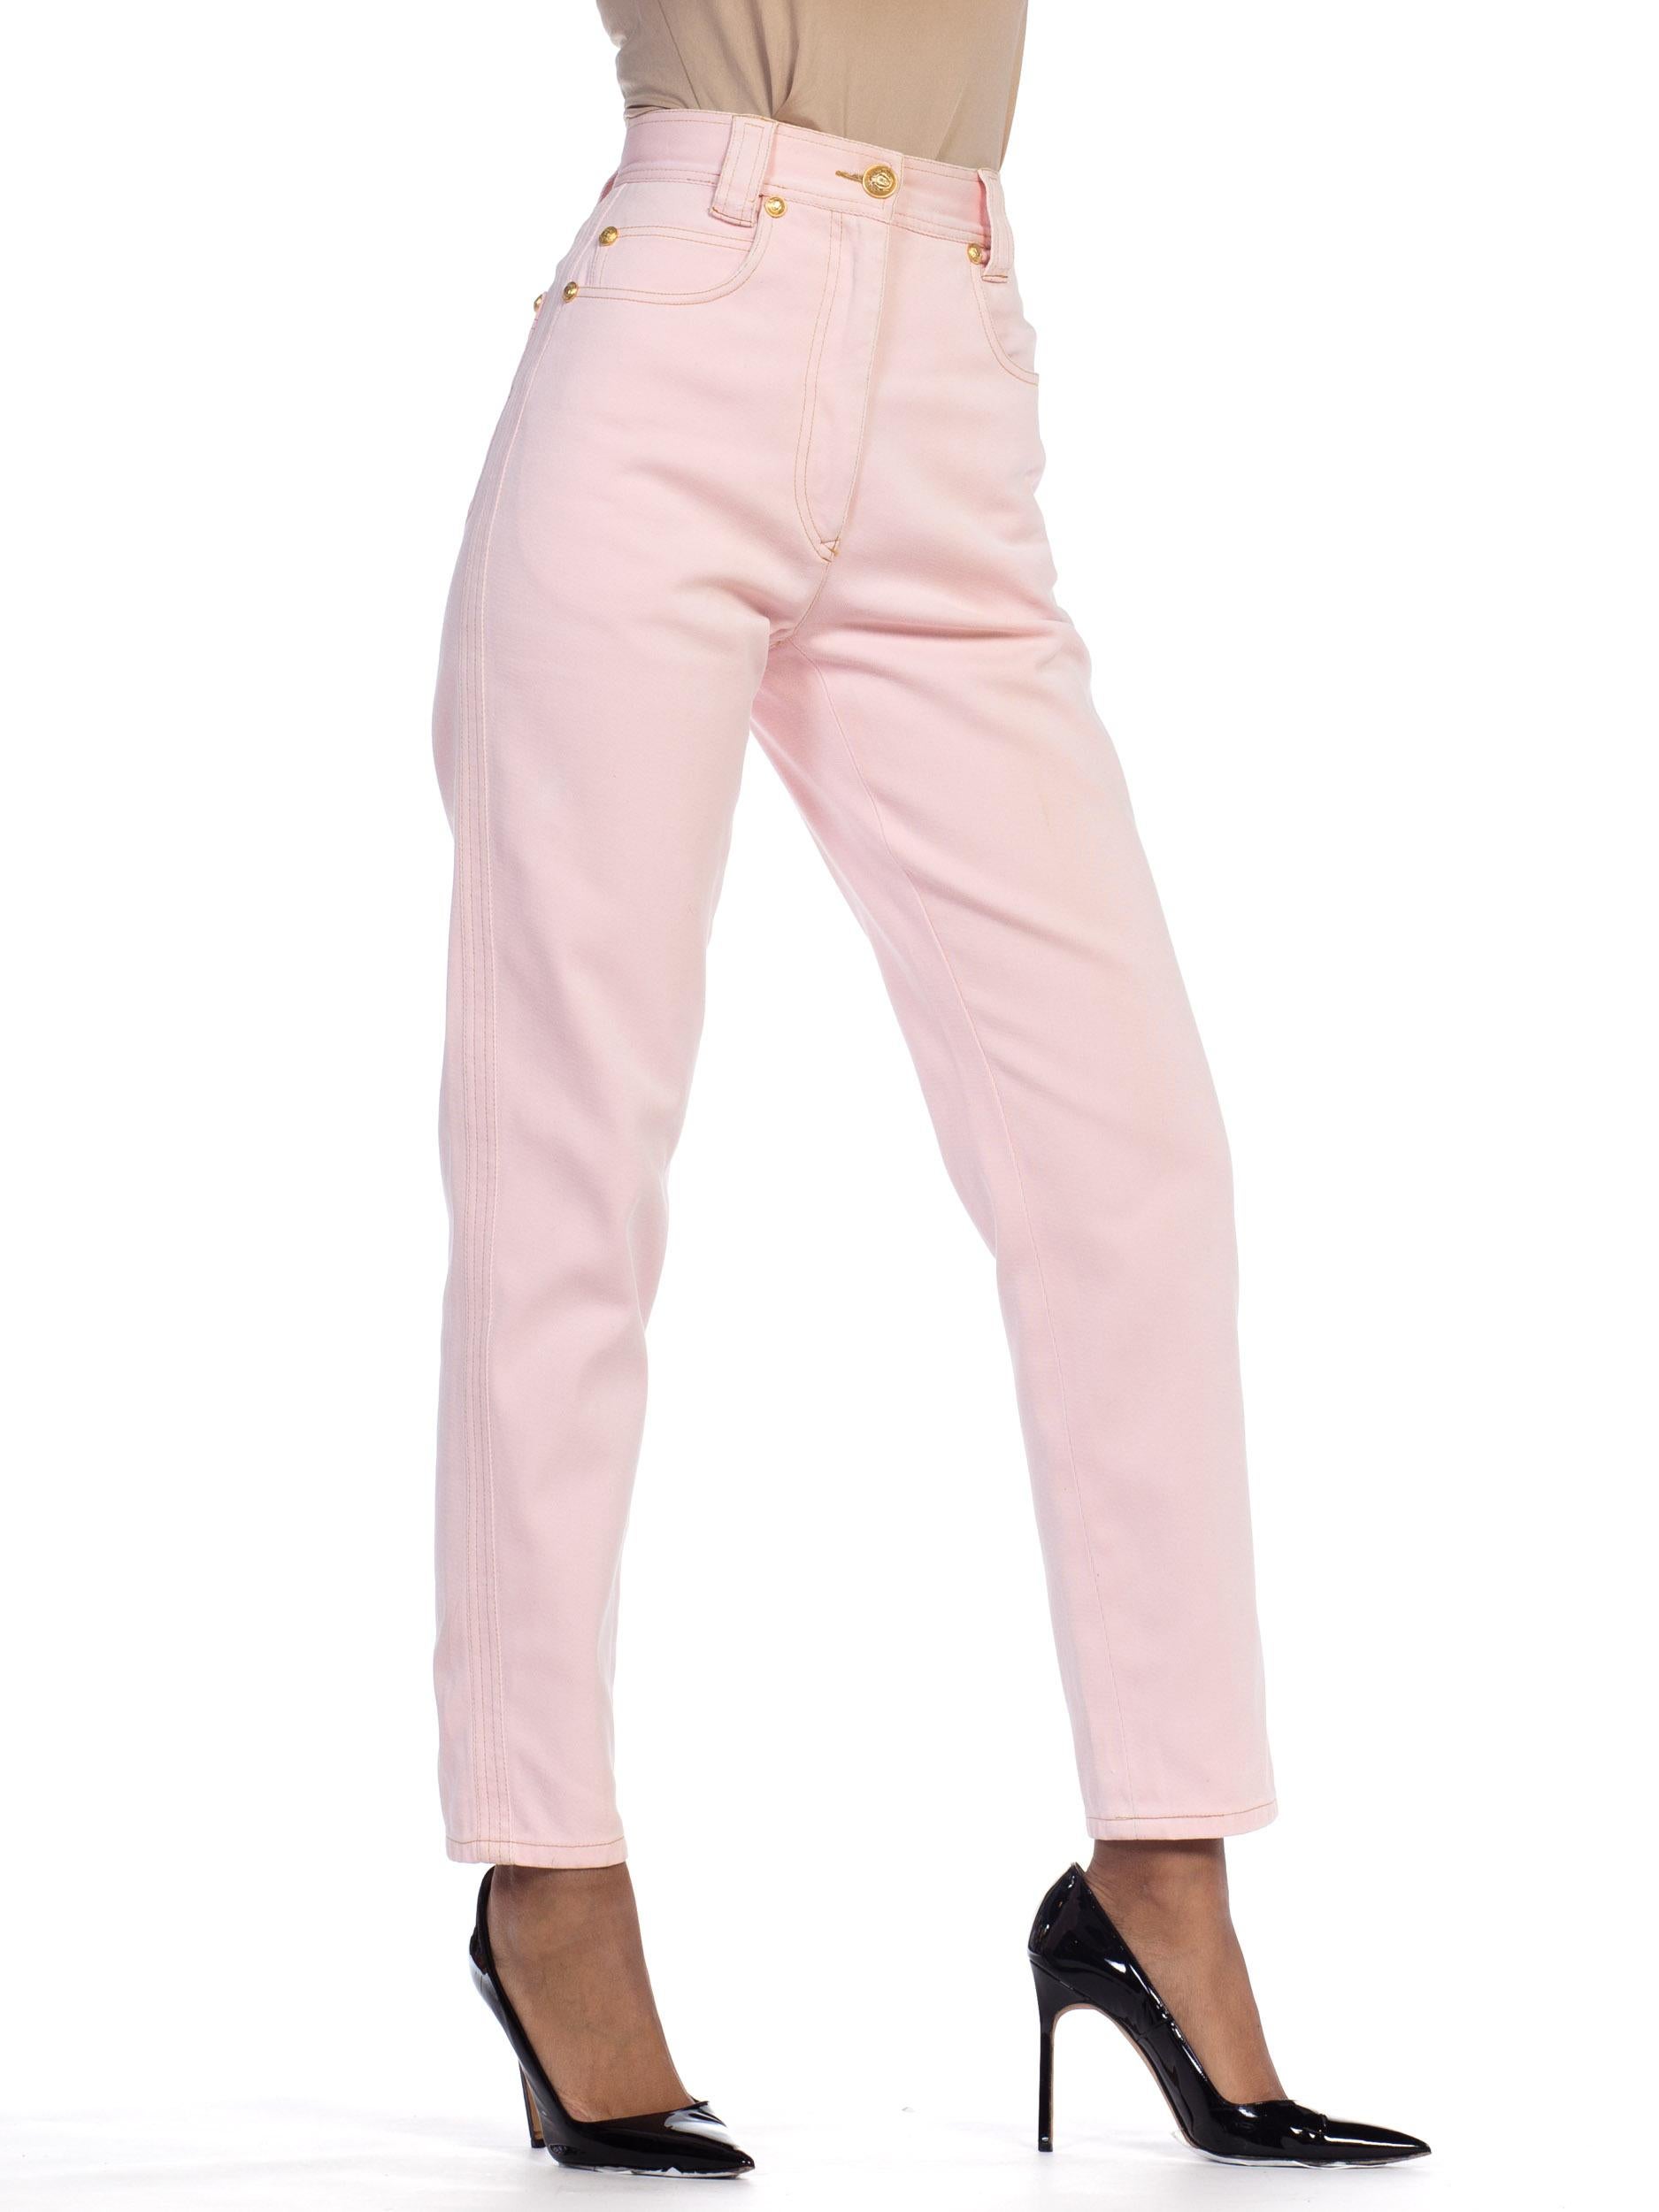 White 1990s Gianni Versace Pastel Pink Denim Jacket & Jeans